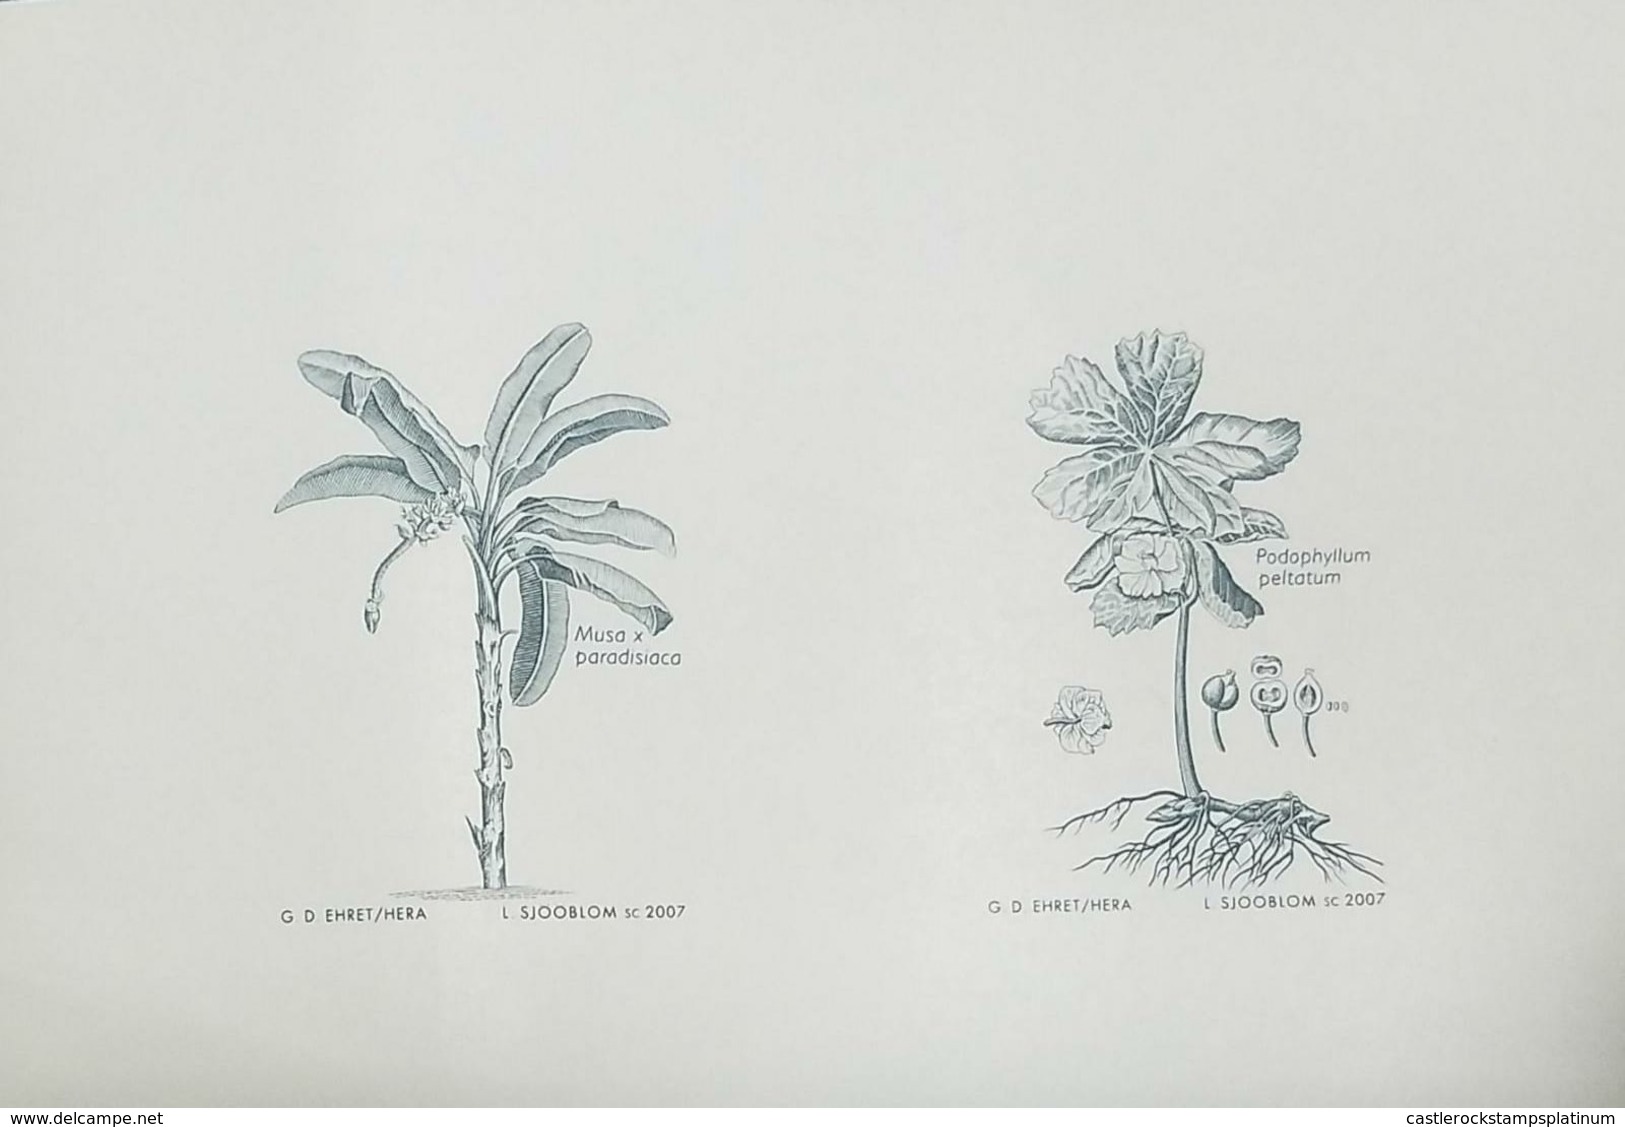 O) 2007 SWEDEN, MEDICINAL PLANTS -MUSA X PARADISIACA - POPOPHYLLUM PELTATUM-BOTANICAL ILLUSTRATON BY GEORG DIONYS EHRET- - Proofs & Reprints